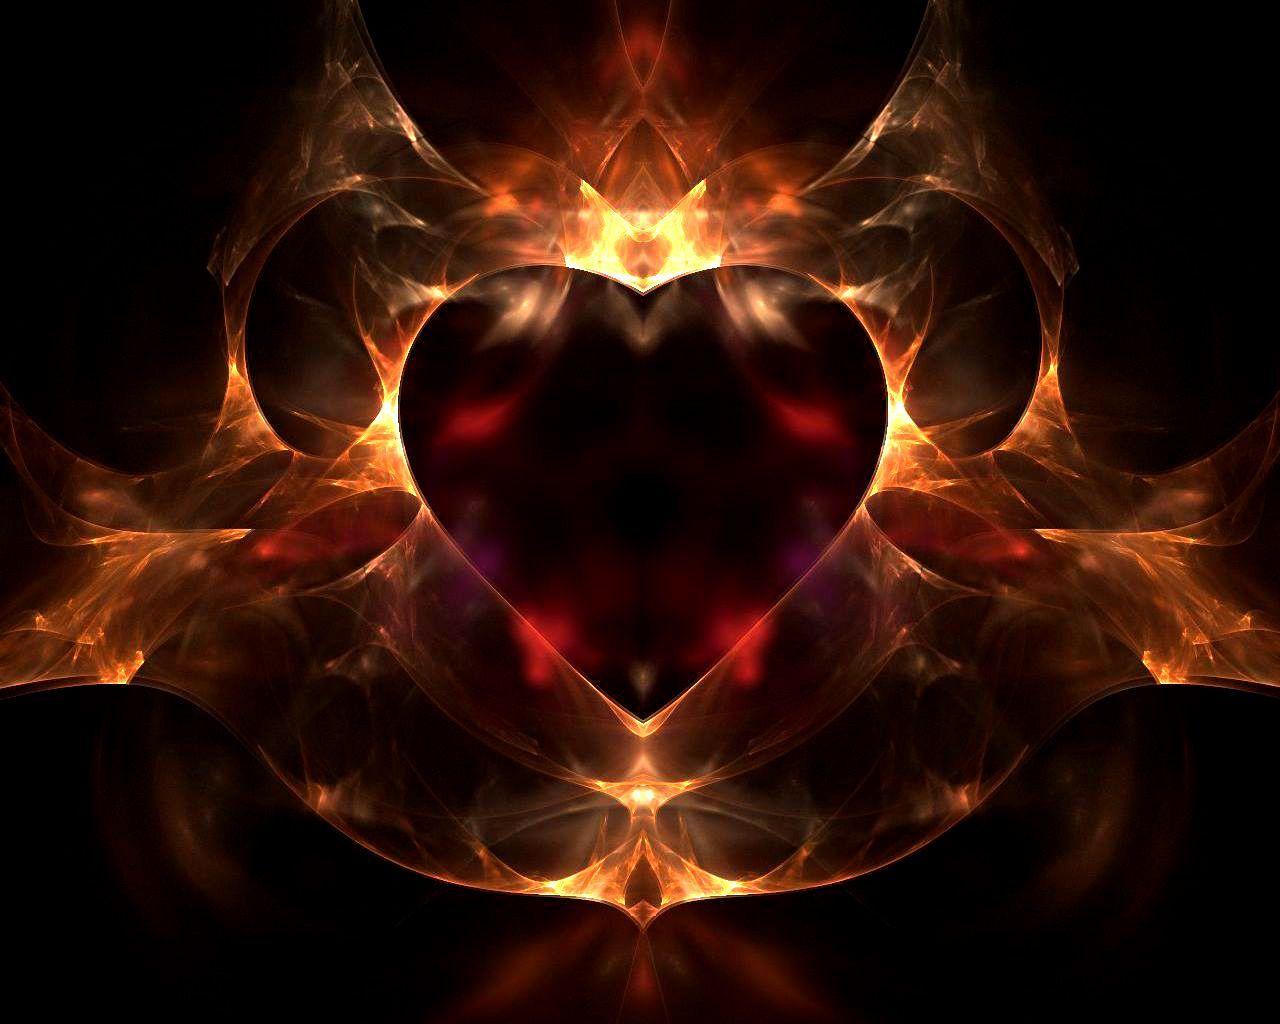 Red Heart fire 3D Wallpaper. Boni's Meditation Cottage